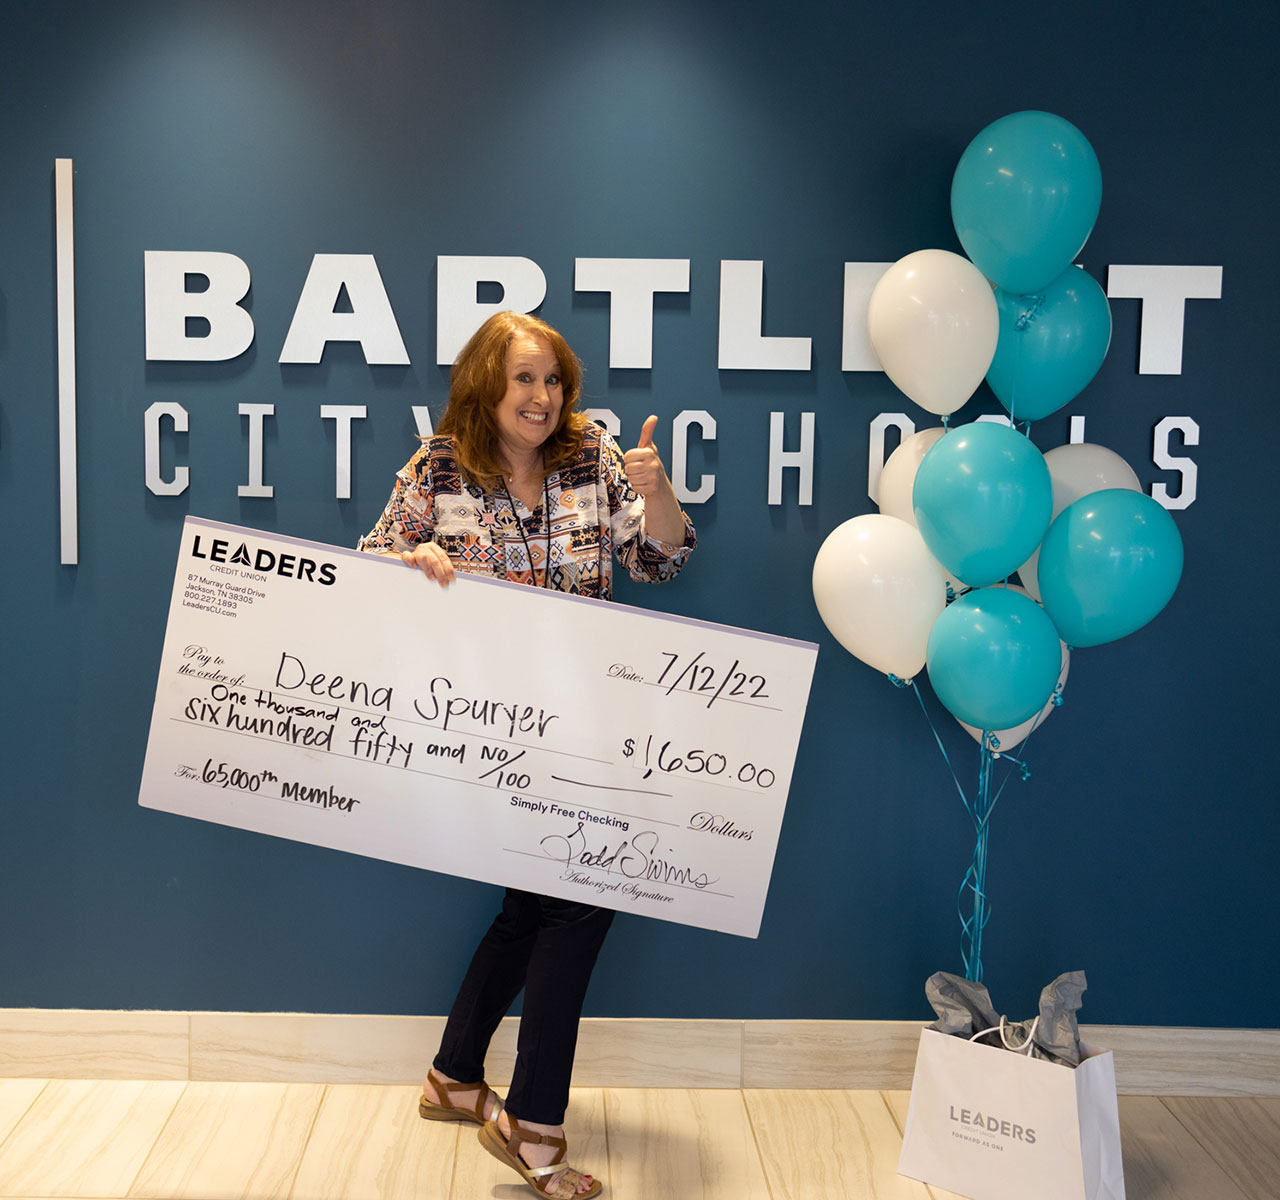 Leaders awards $1,650 to 65,000th member a Bartlett City School employee